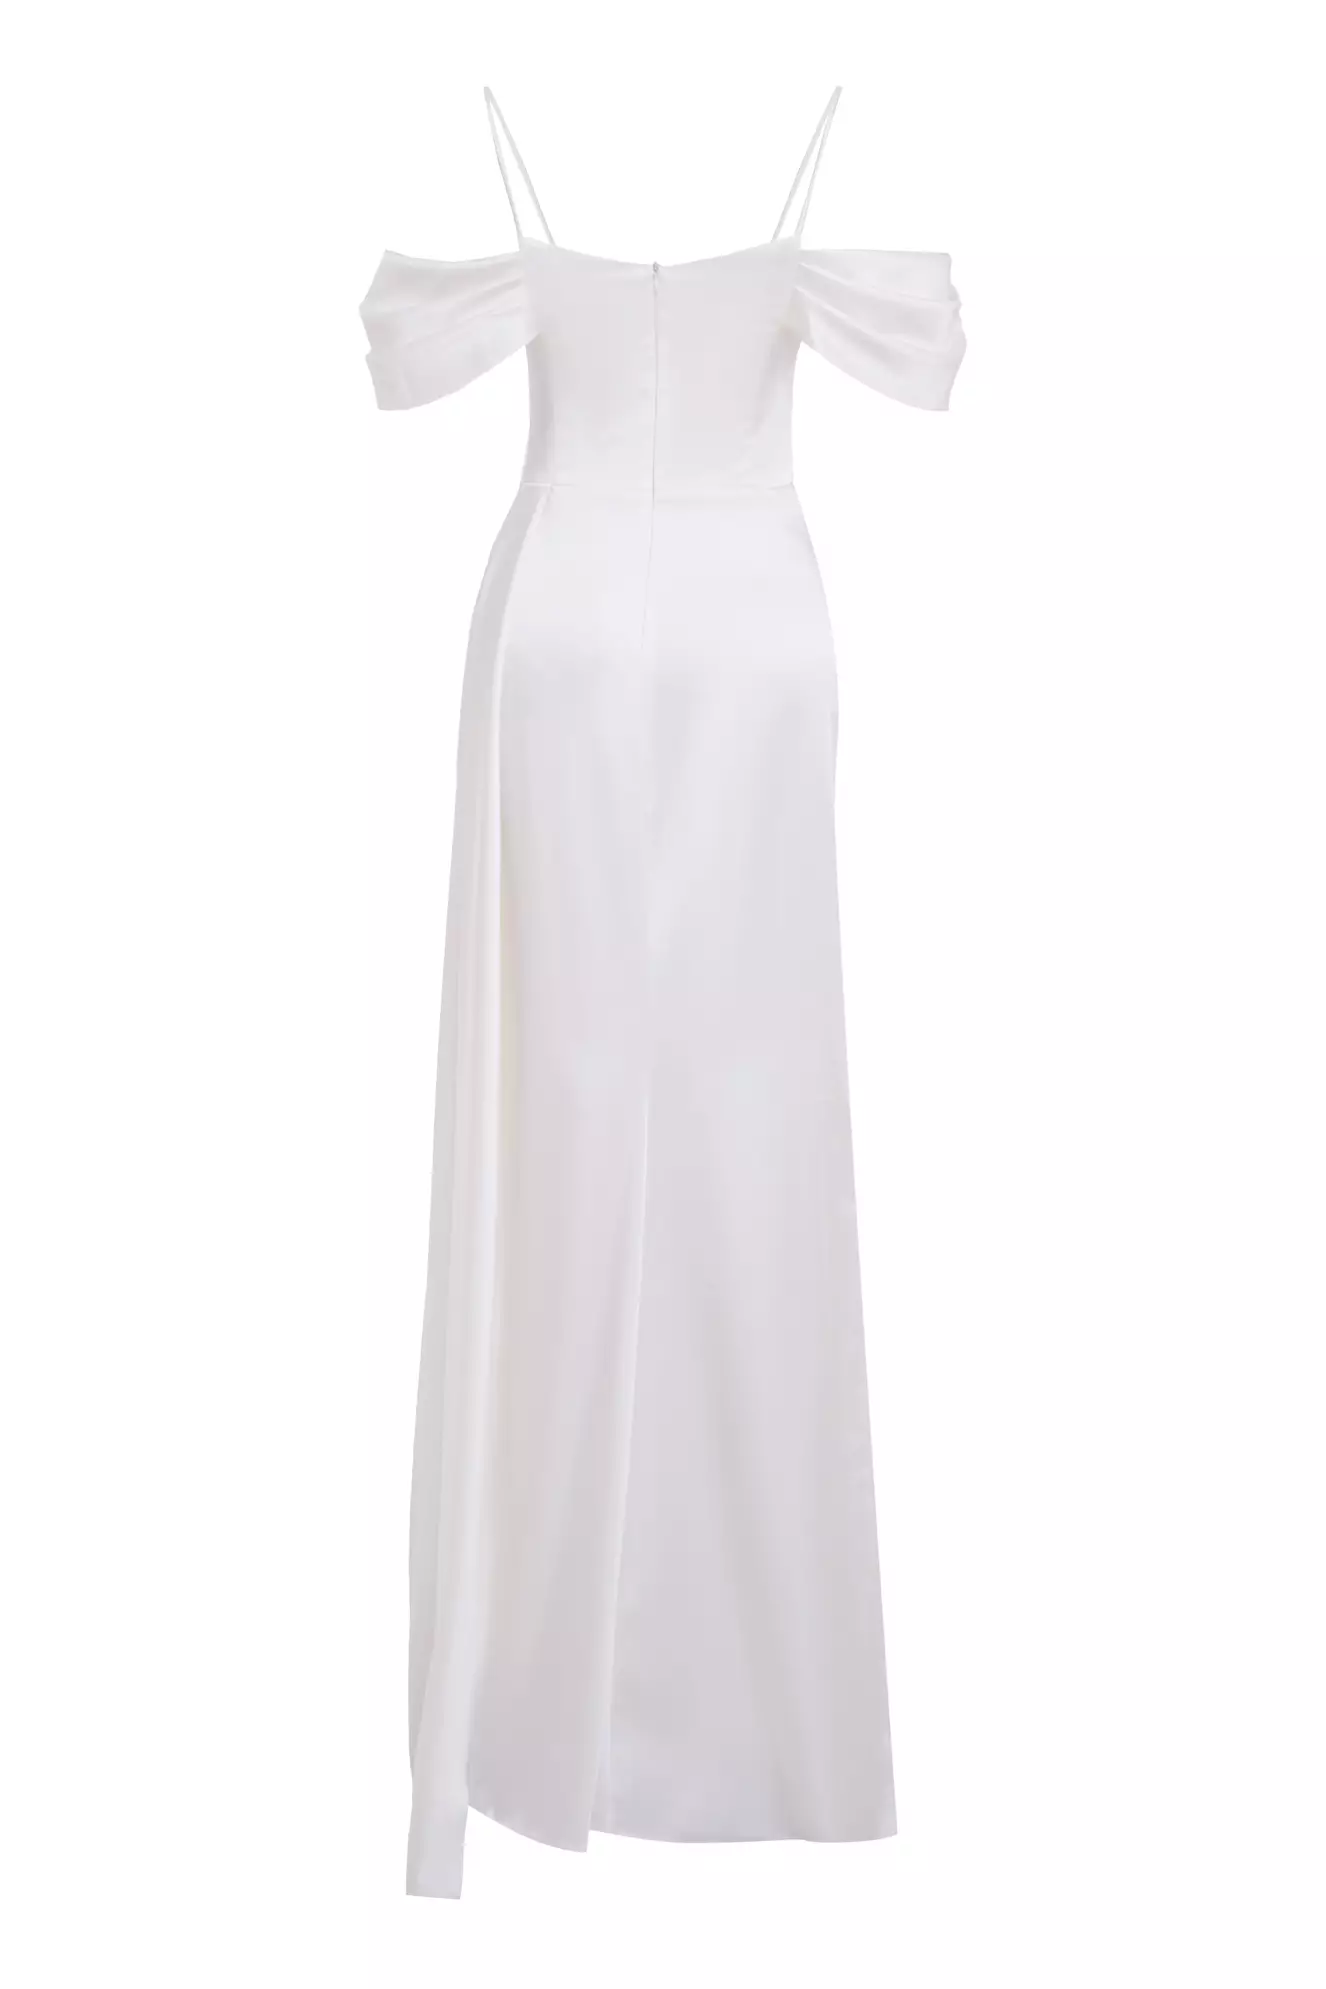 White satin sleeveless long dress